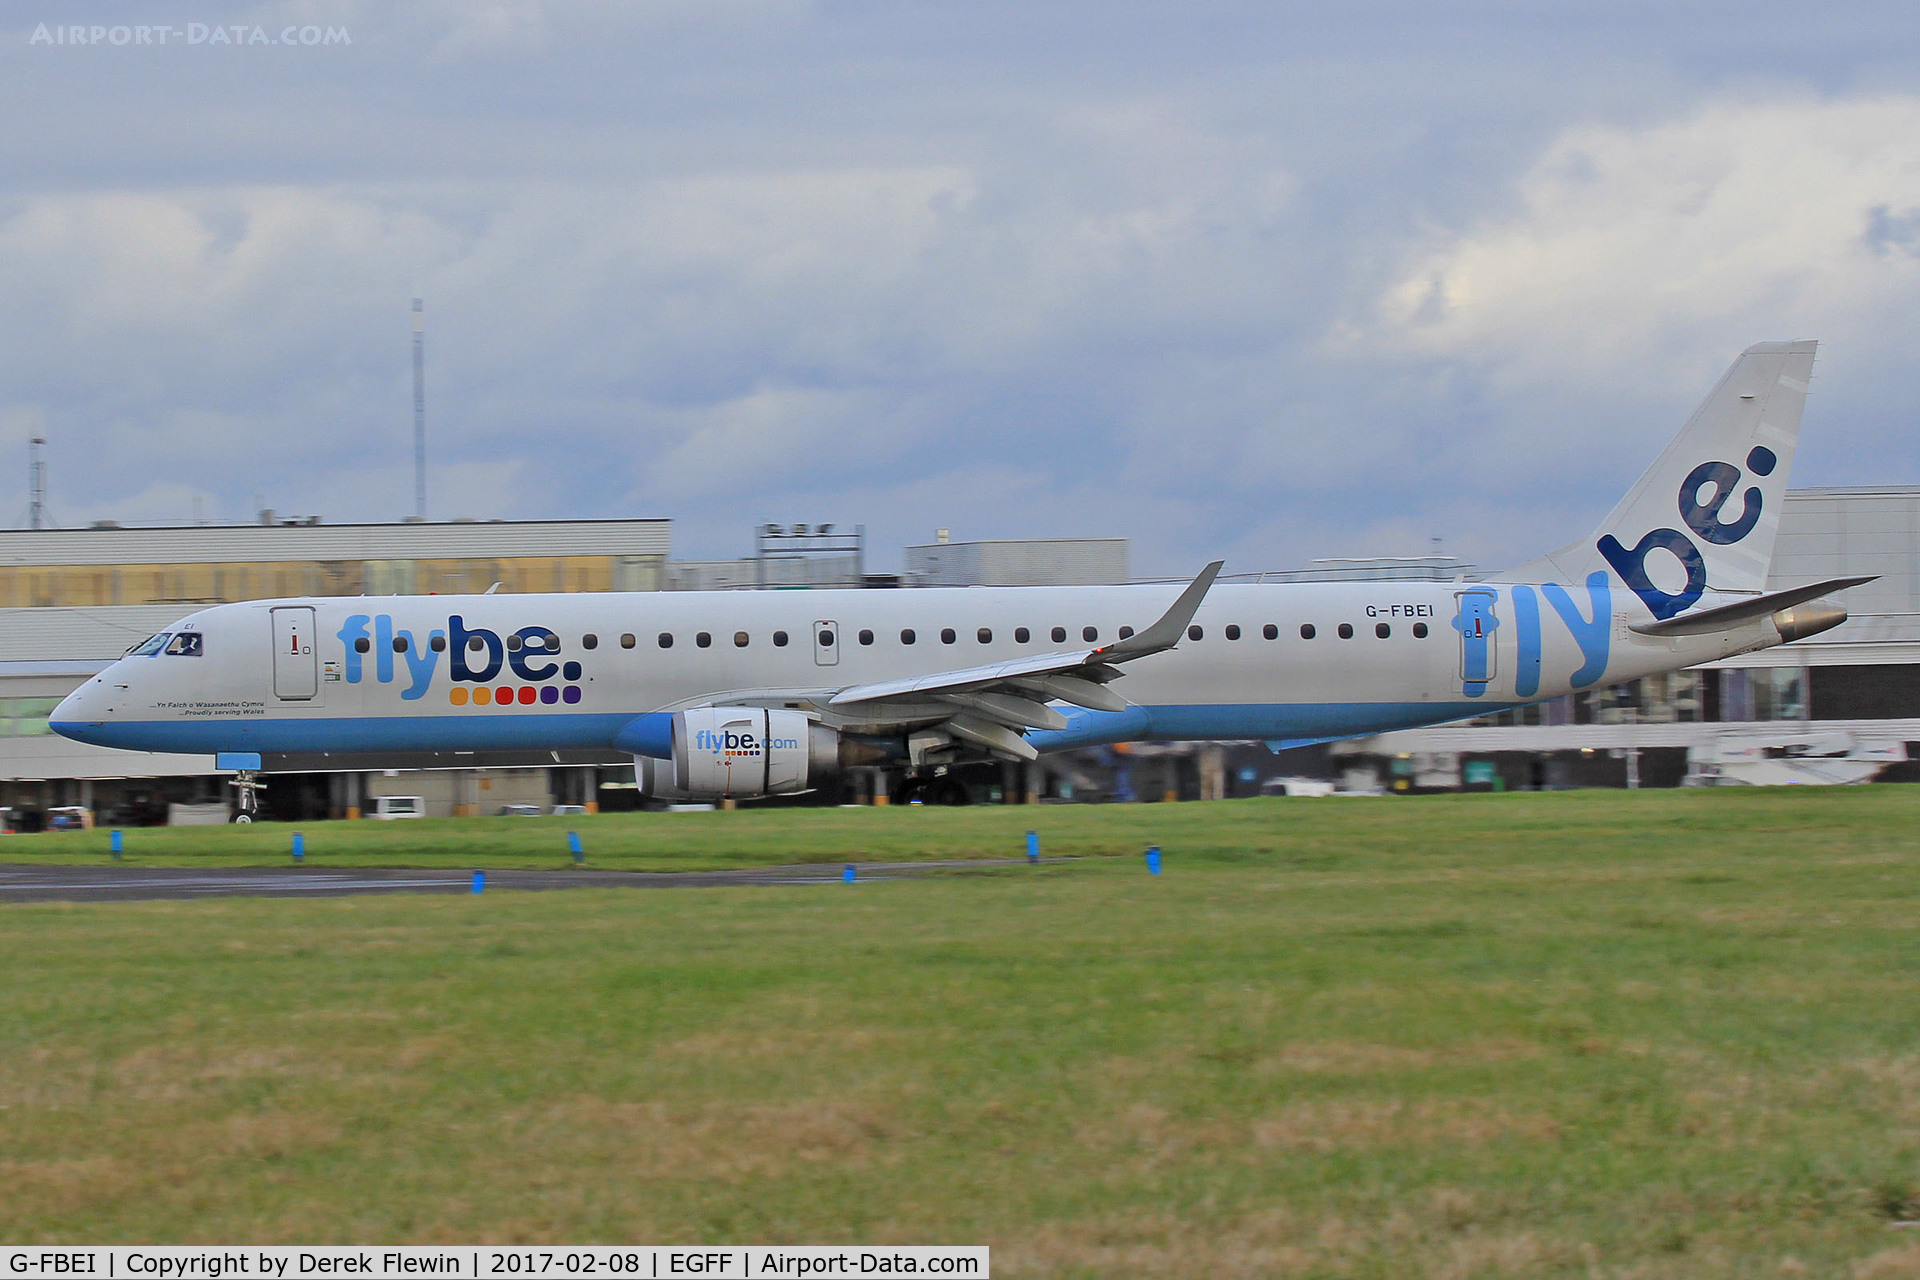 G-FBEI, 2007 Embraer 195LR (ERJ-190-200LR) C/N 19000143, Embraer, Flybe, call sign Jersey 4UE, previously PT-SYV, seen landing on runway 30 out of Paris CDG.